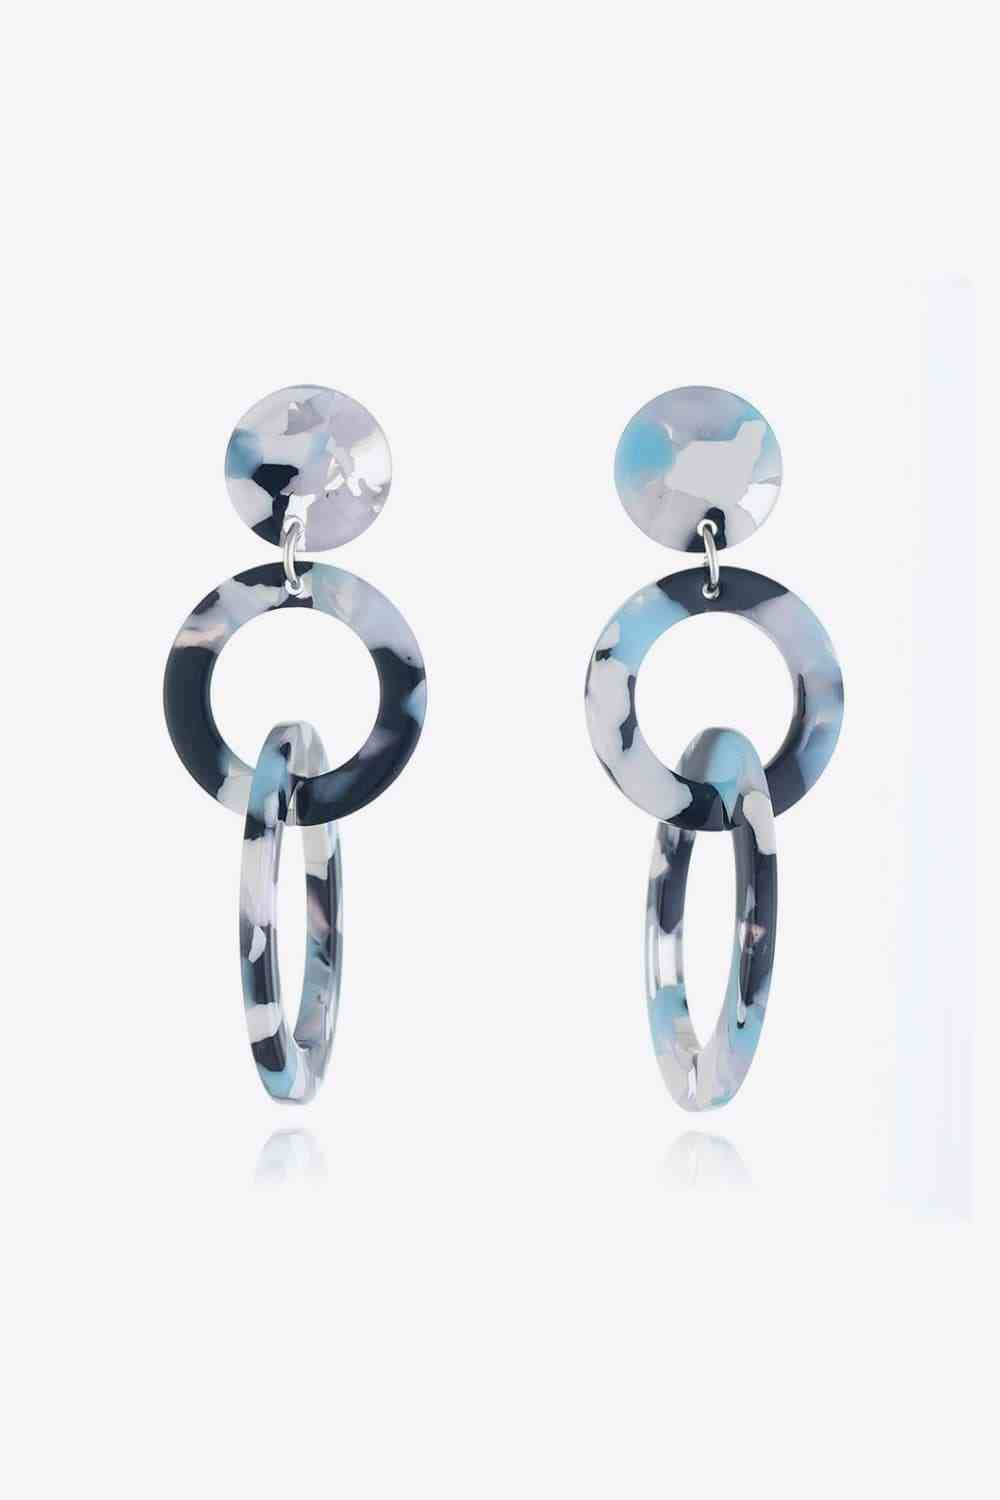 Acrylic Double-Hoop Earrings - Everyday-Sales.com